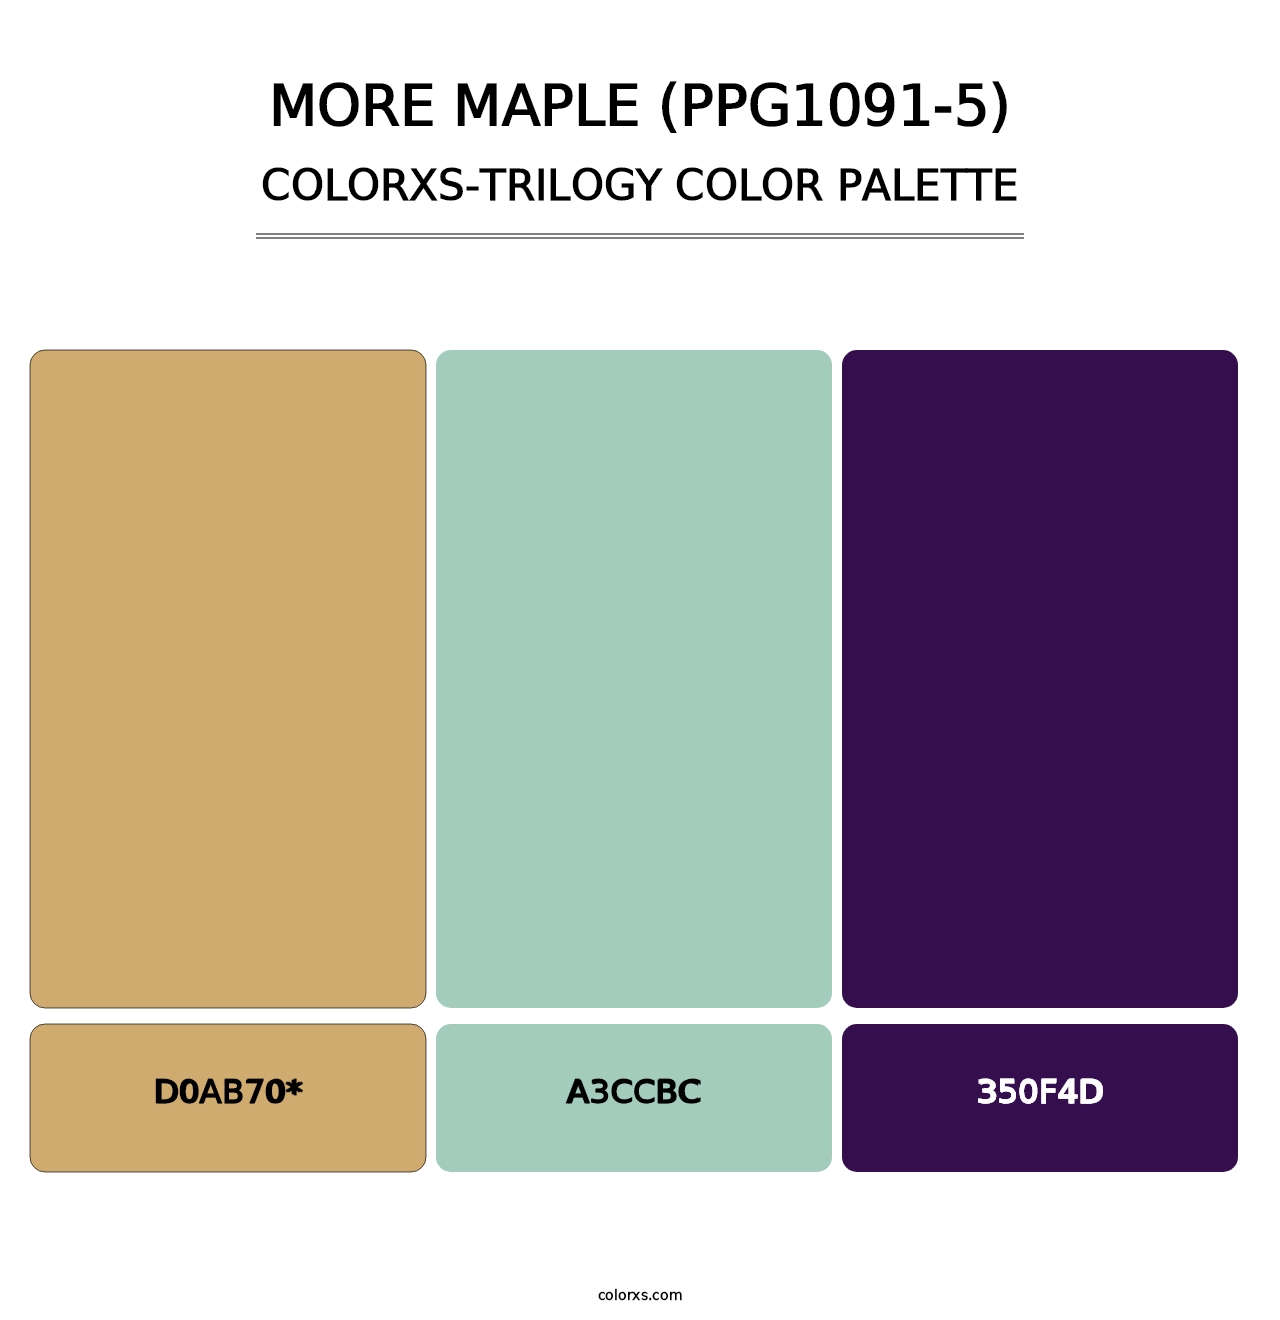 More Maple (PPG1091-5) - Colorxs Trilogy Palette